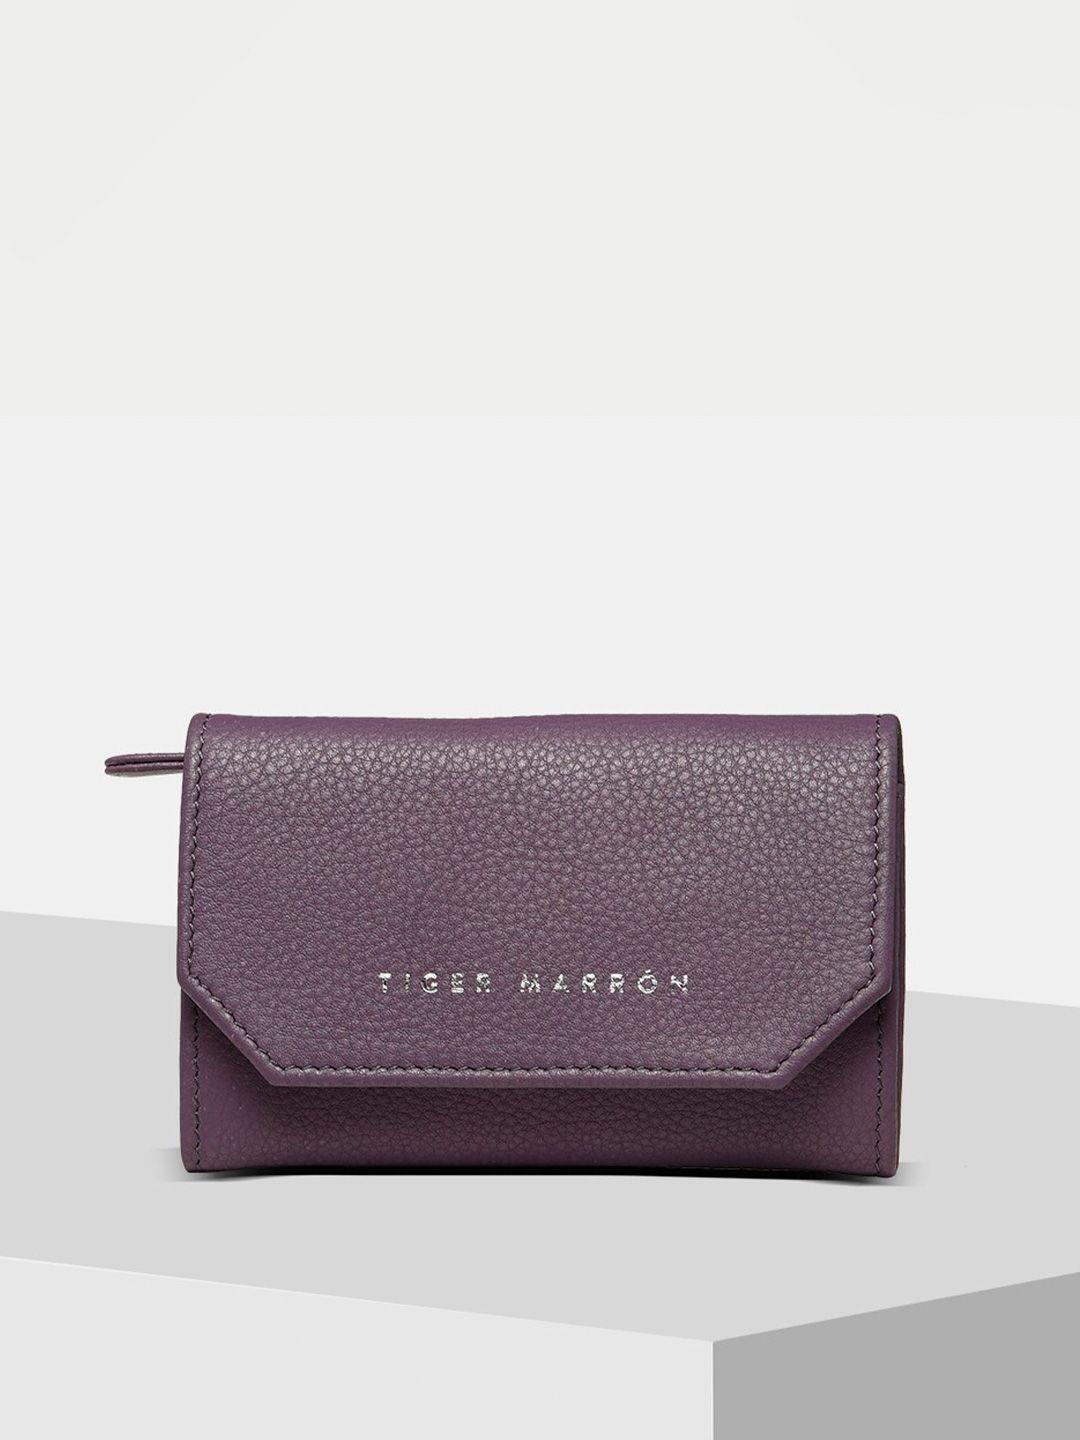 tiger marron women leather two fold wallet